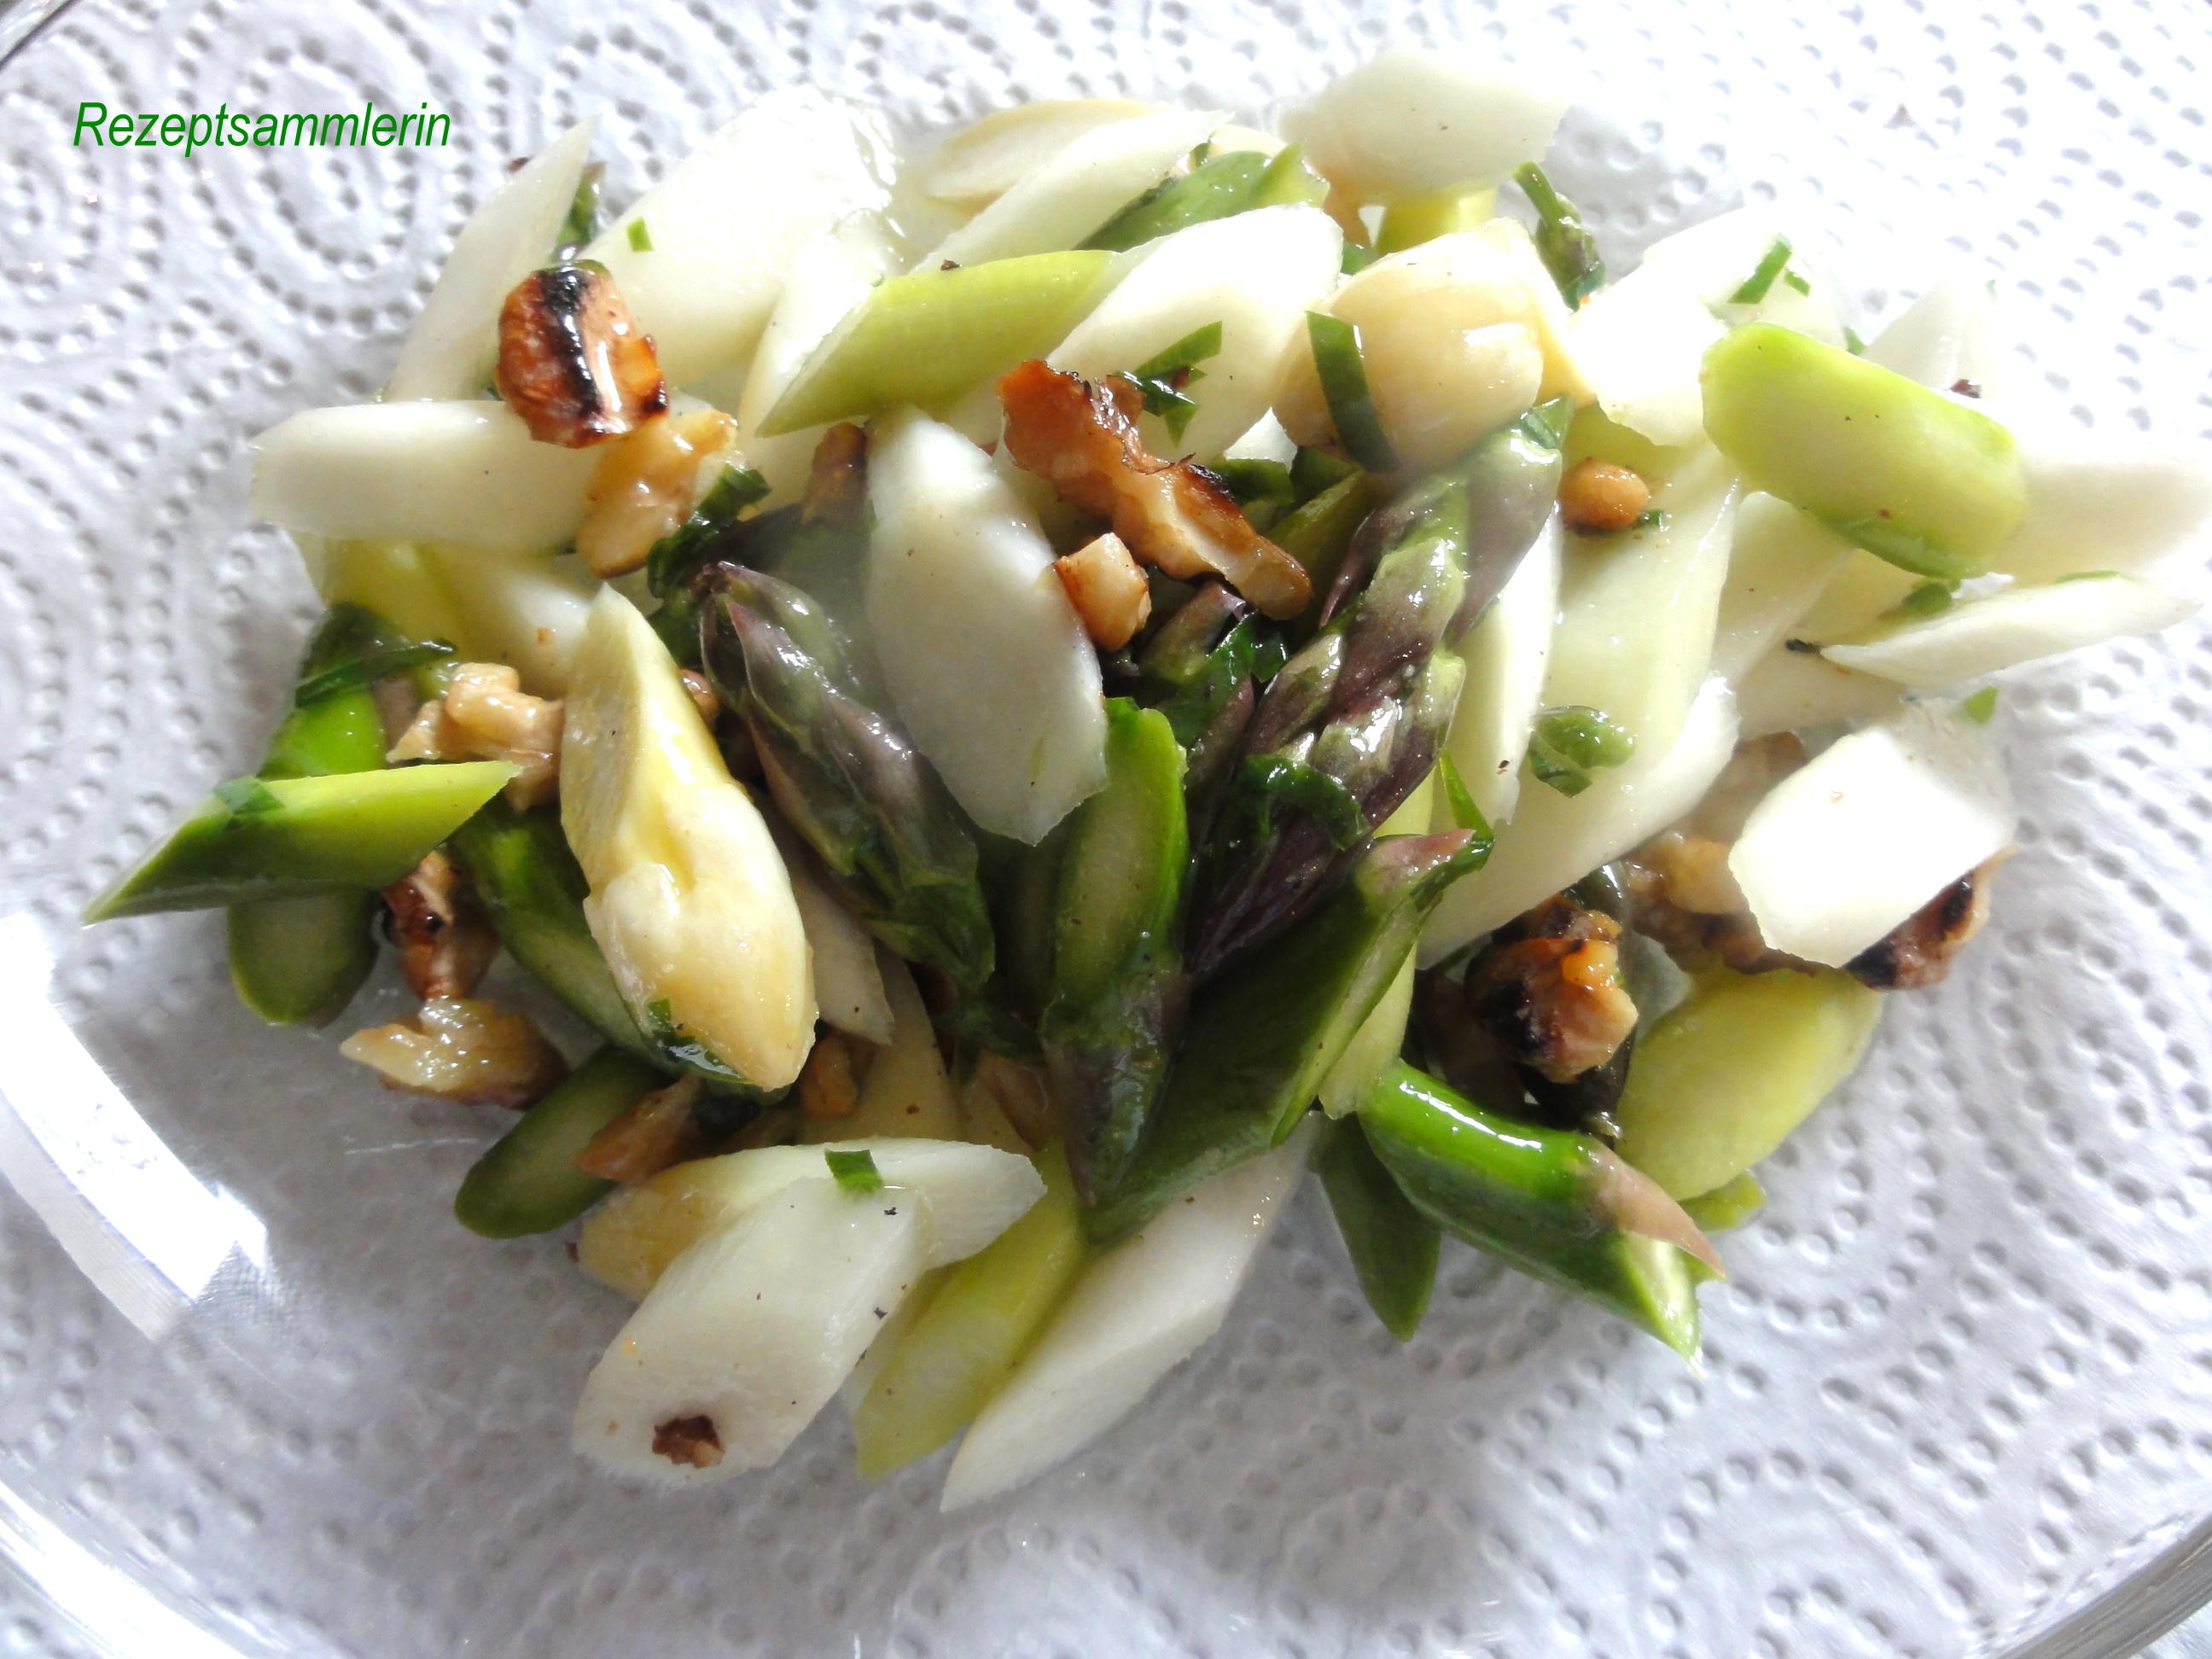 Salatbar: SPARGEL ~ SALAT aus rohen Spargelstangen - Rezept Gesendet
von Rezeptsammlerin